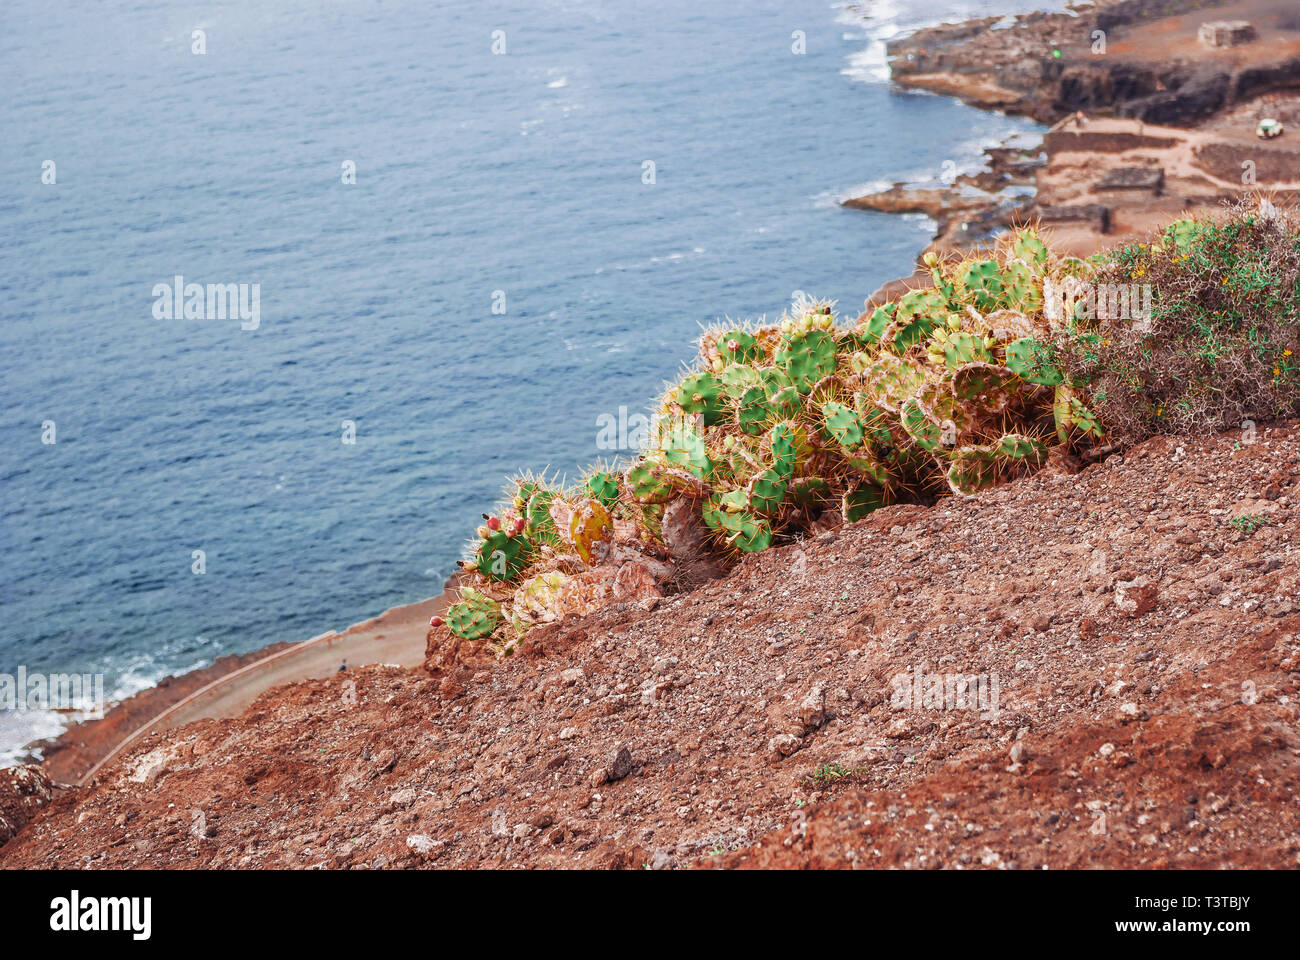 Cactus grow on red rocks on the seashore Stock Photo